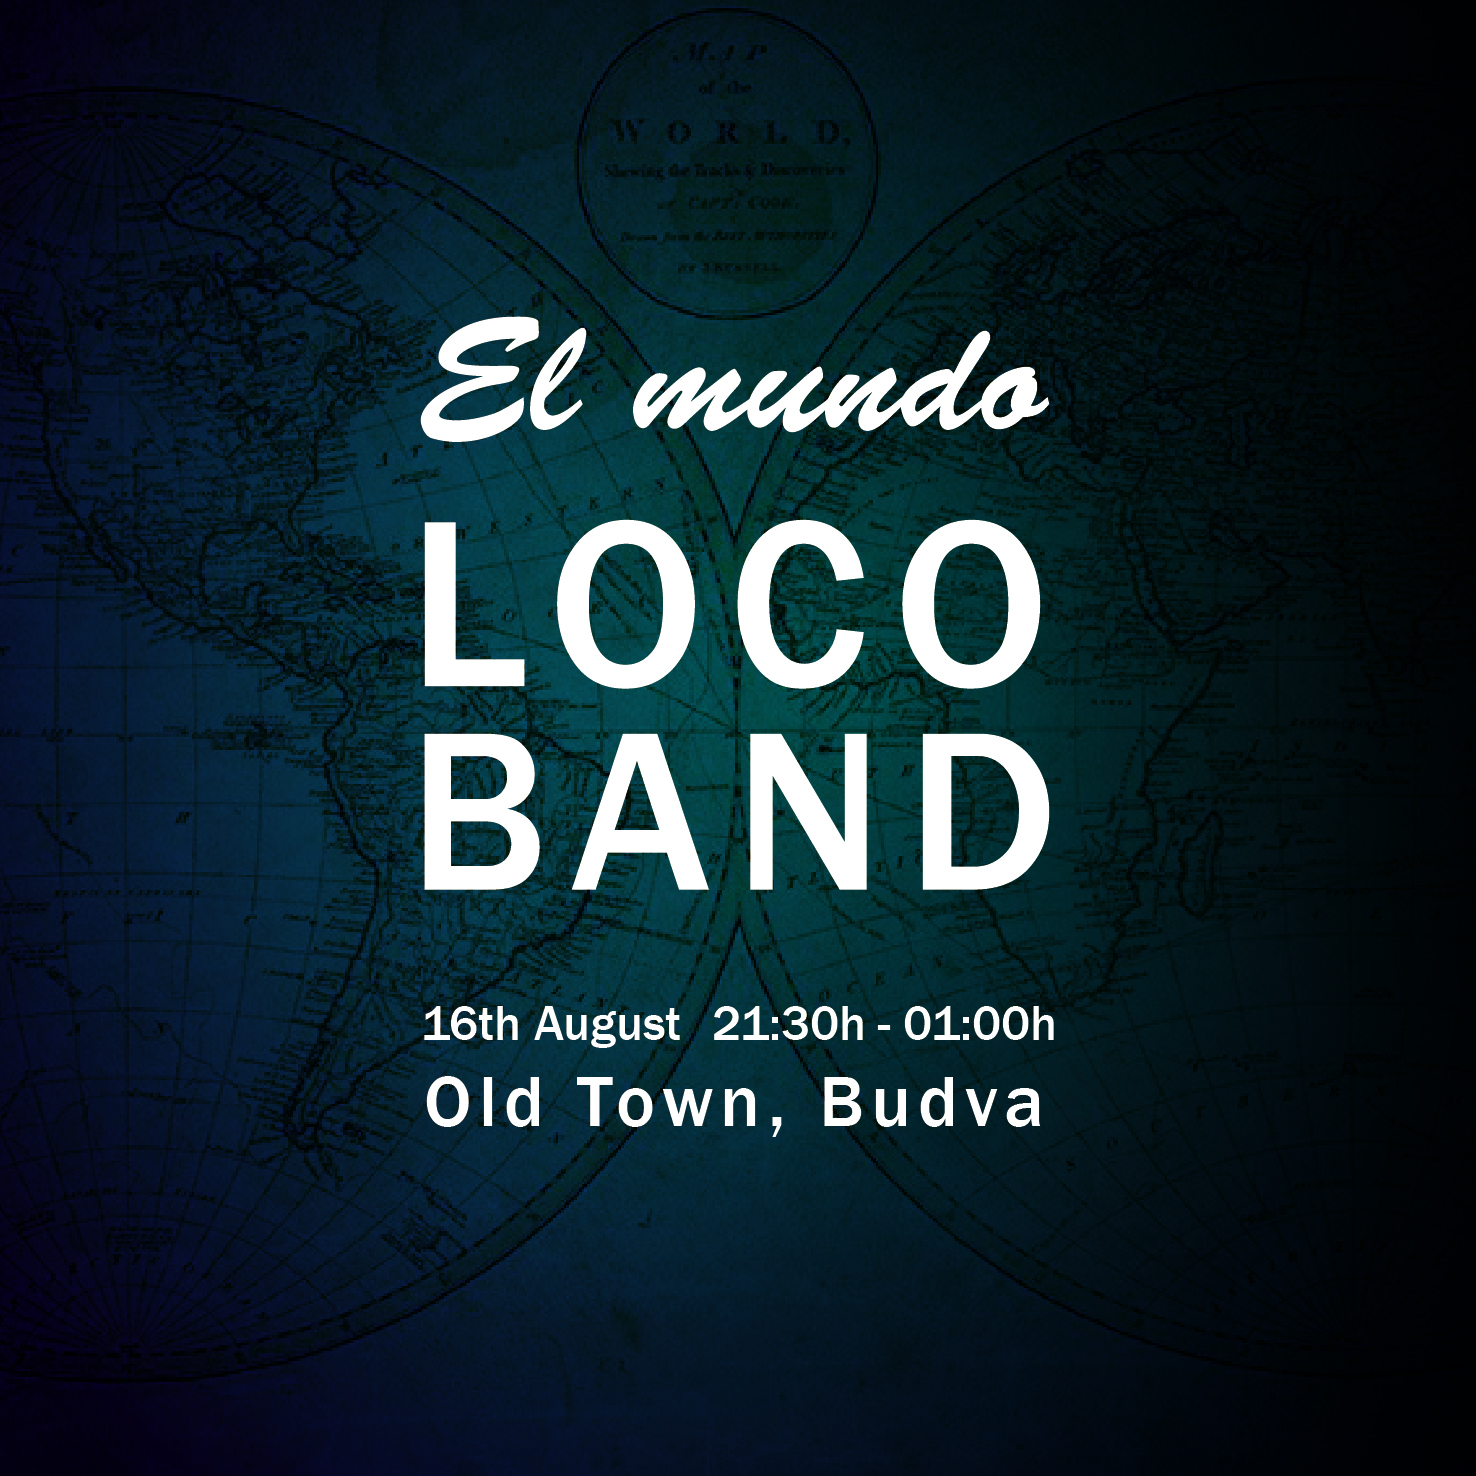 Loco Band